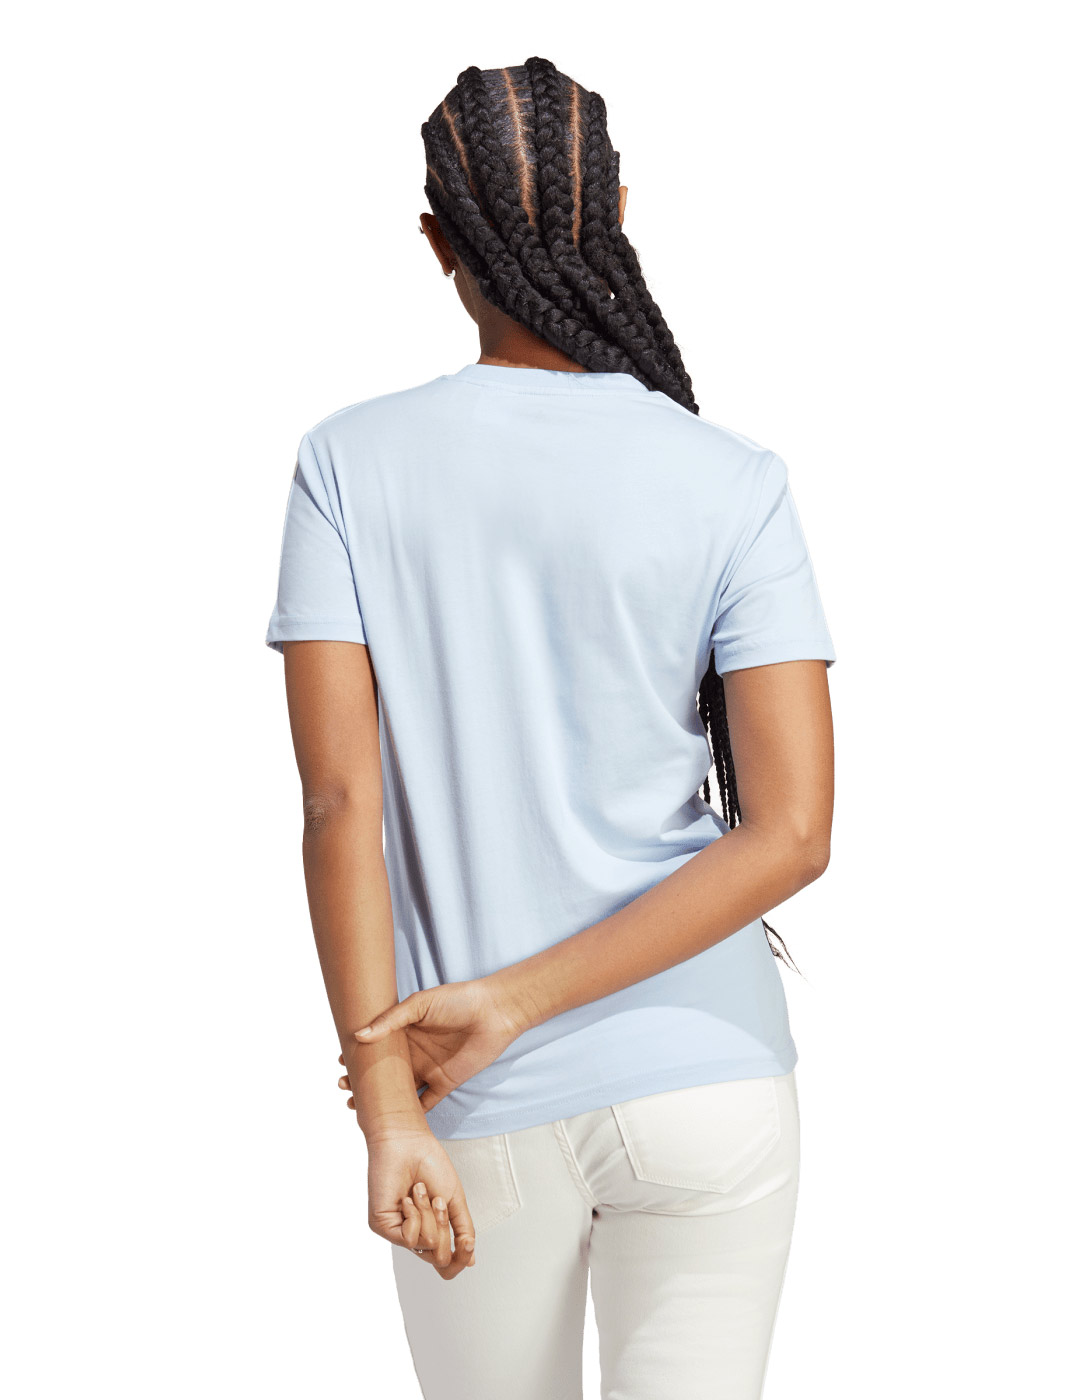 camiseta manga corta 3 bandas mujer, celeste-blanco